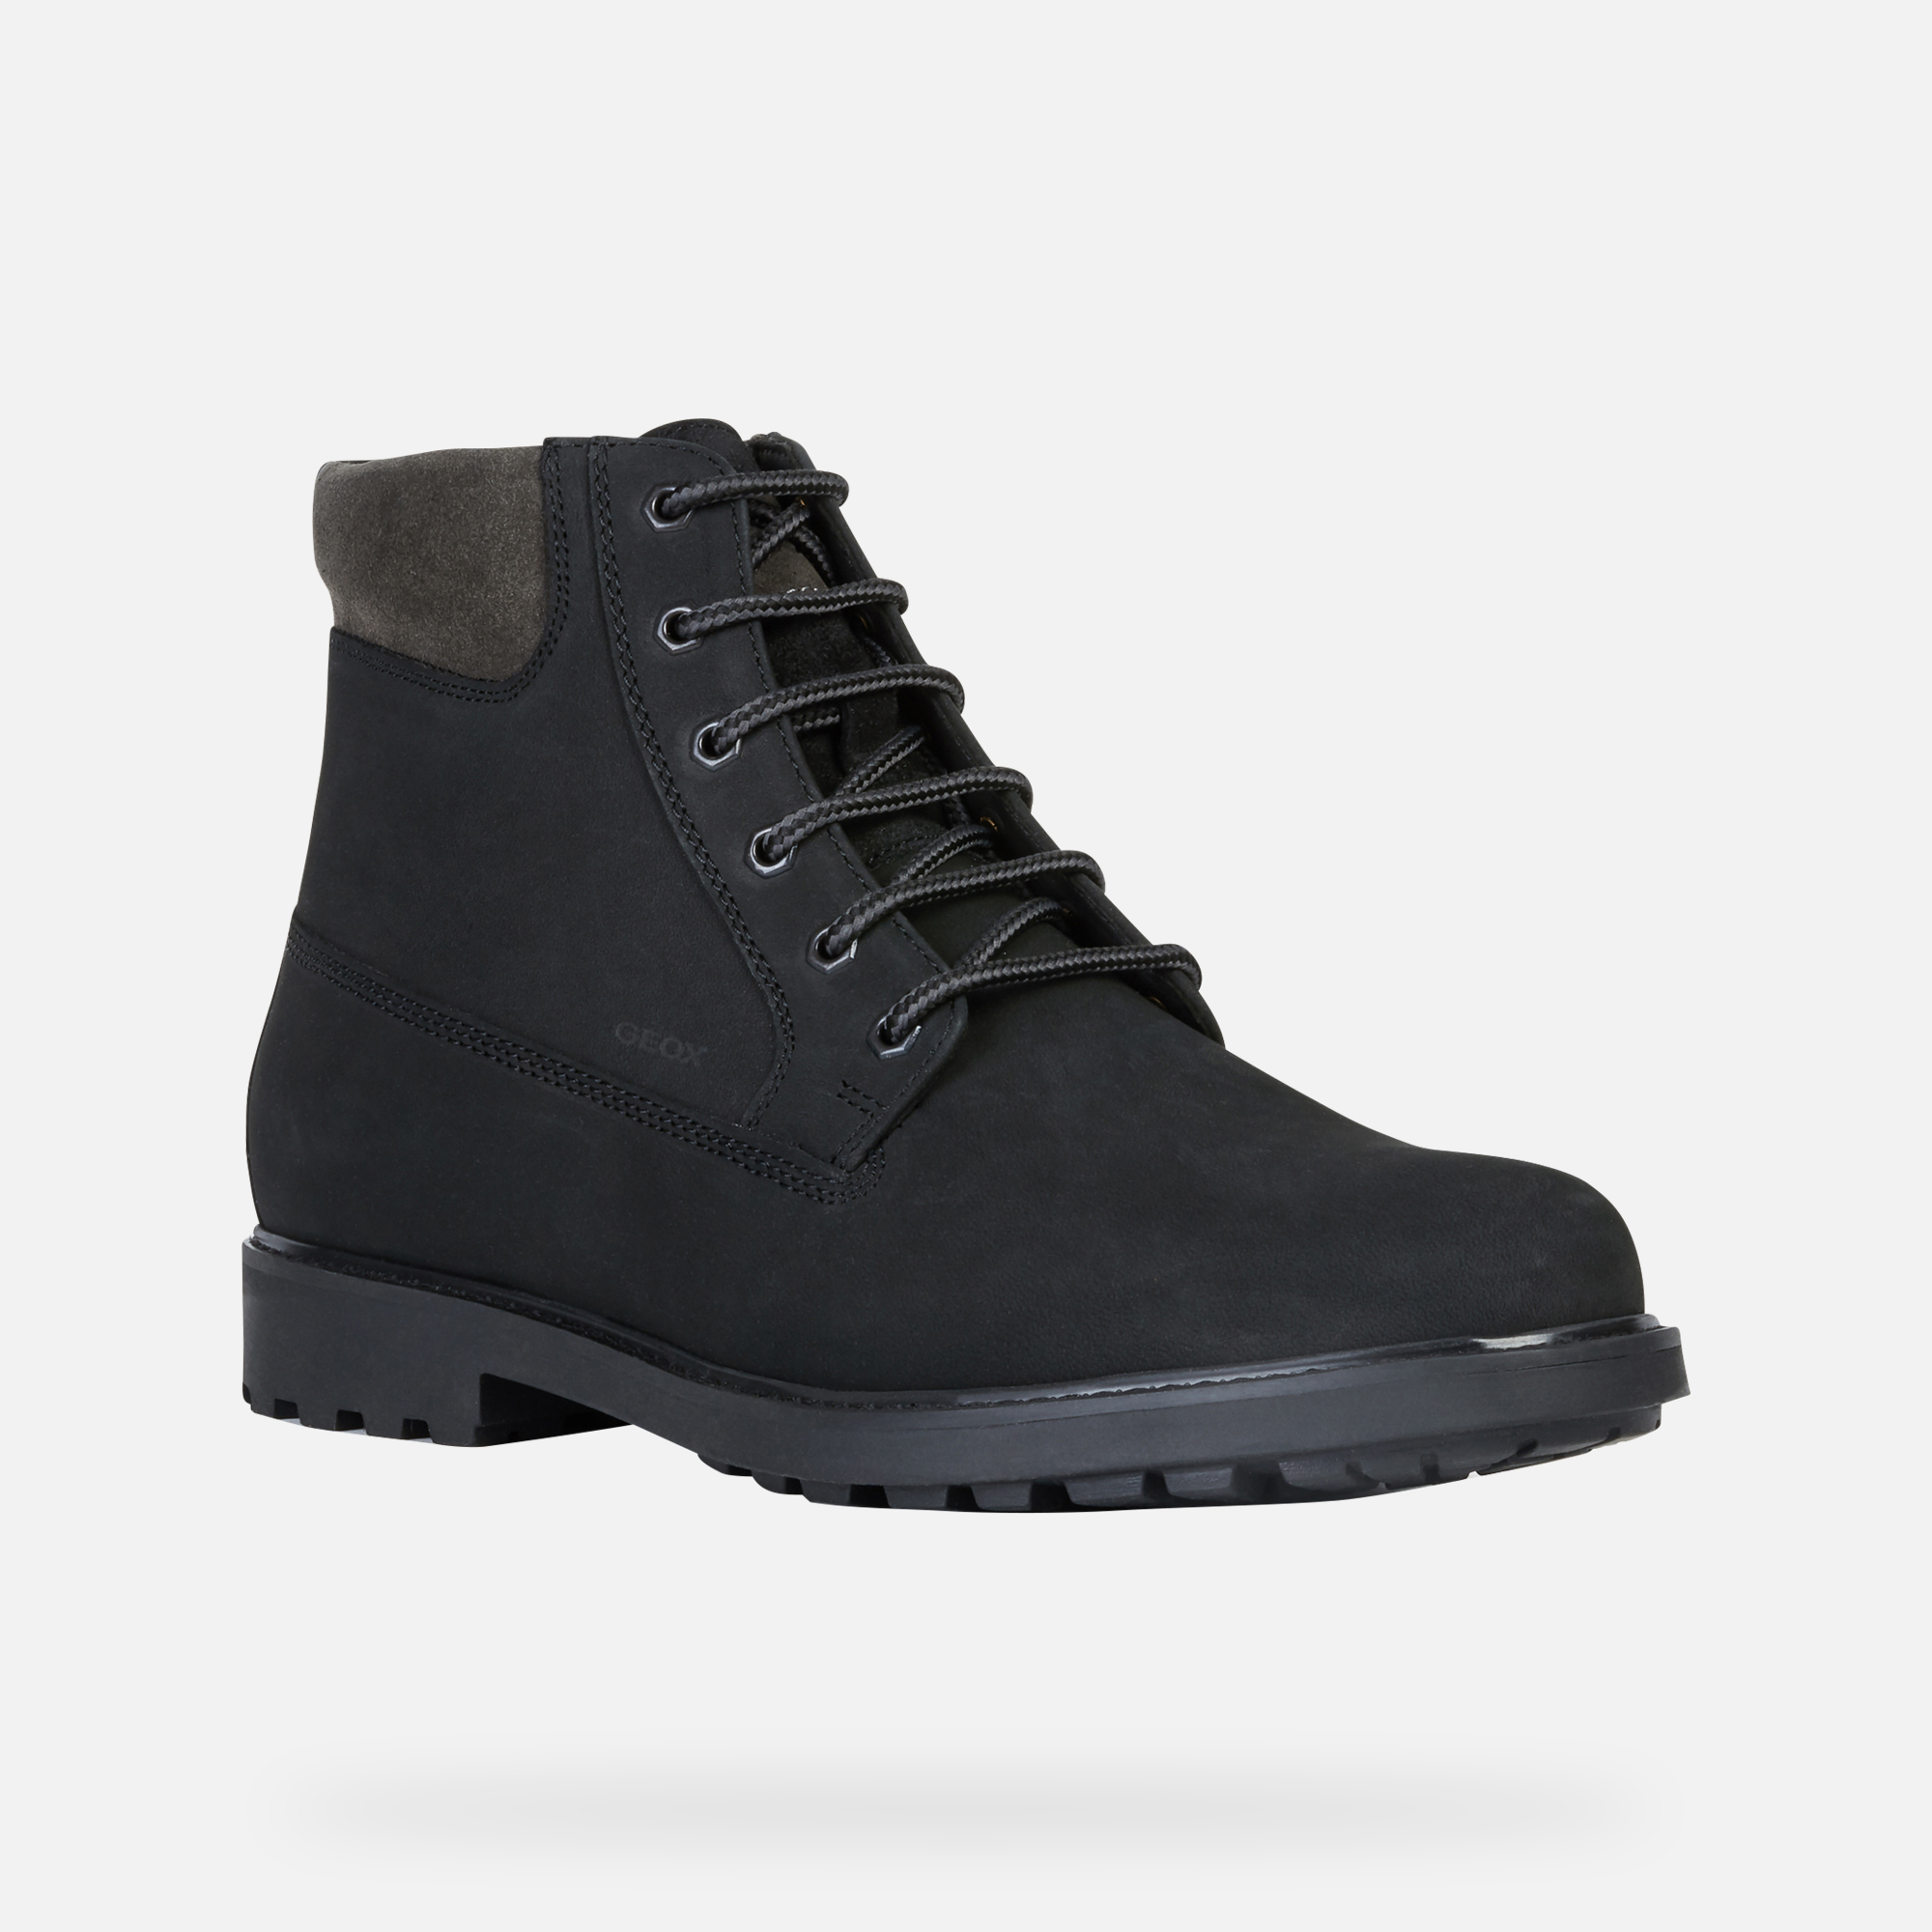 Geox NORWOLK Man: Black Ankle Boots | Geox ® FW 19/20